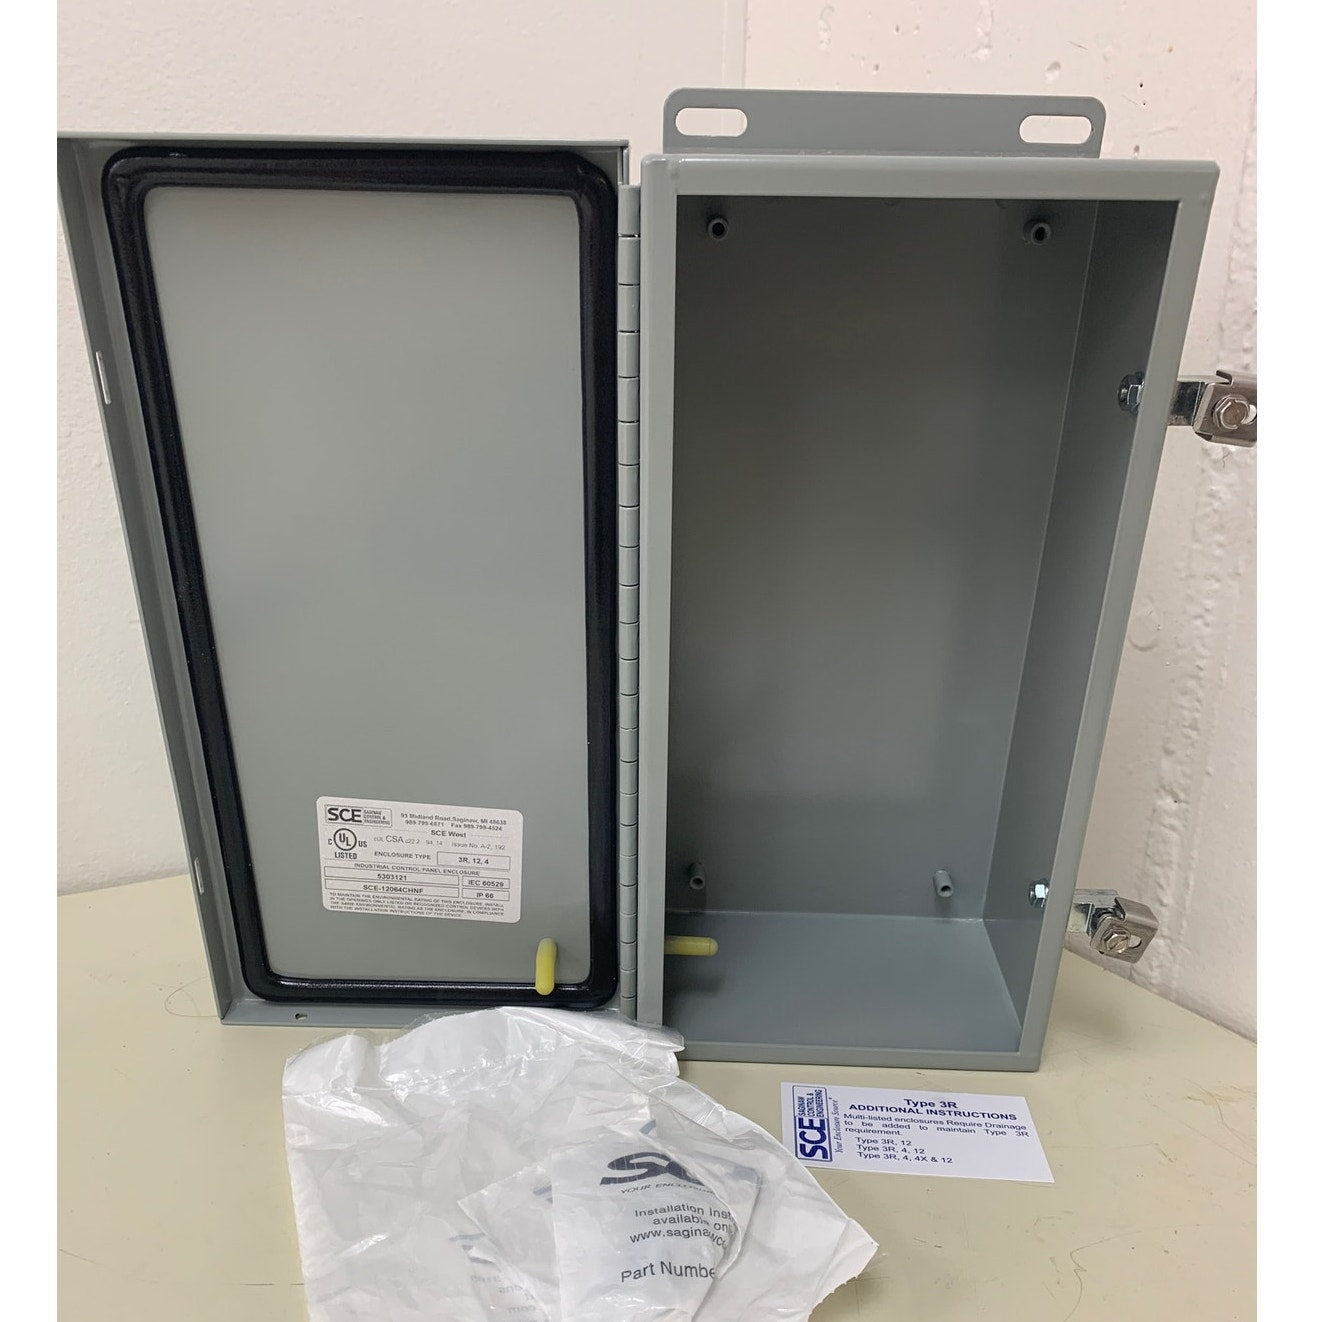 New SCE 3R 12 4 Metal Industrial Control Panel Enclosure Box w Mounting Screws